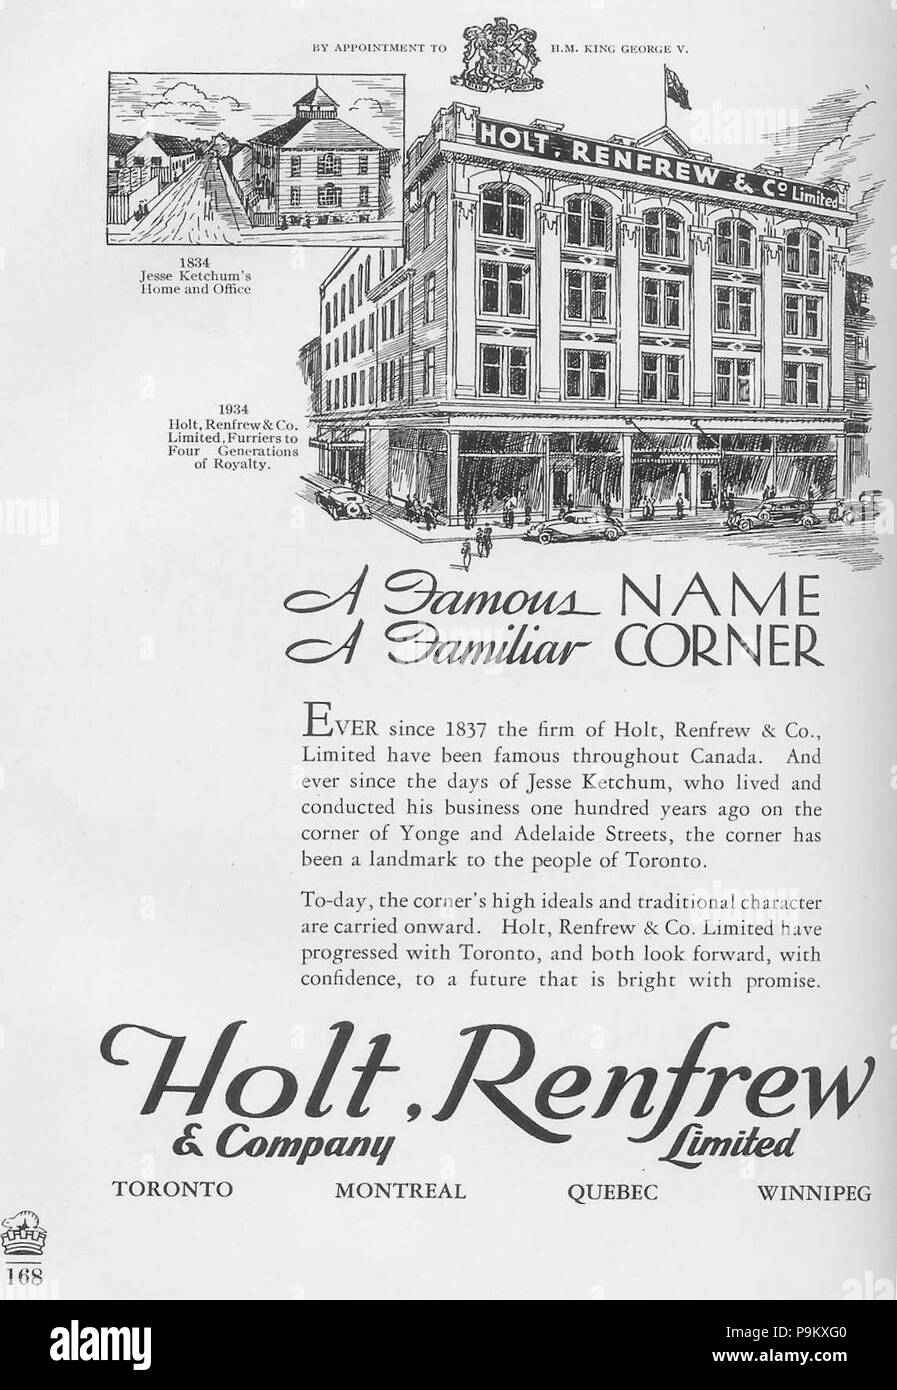 316 Toronto Holt Renfrew advertisement Stock Photo - Alamy